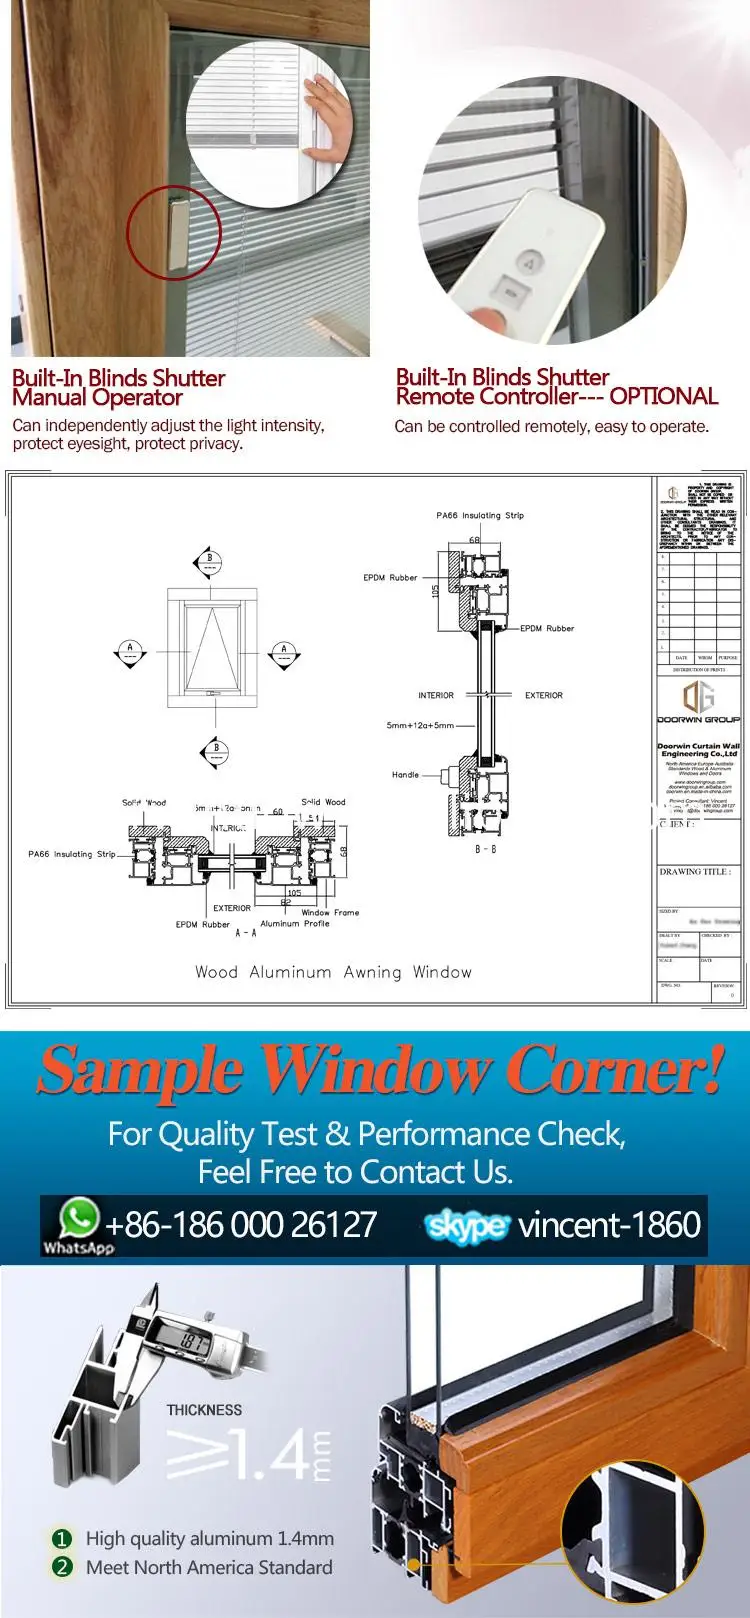 Factory hot sale doric chain winder aluminum awning window doorwin windows sizes